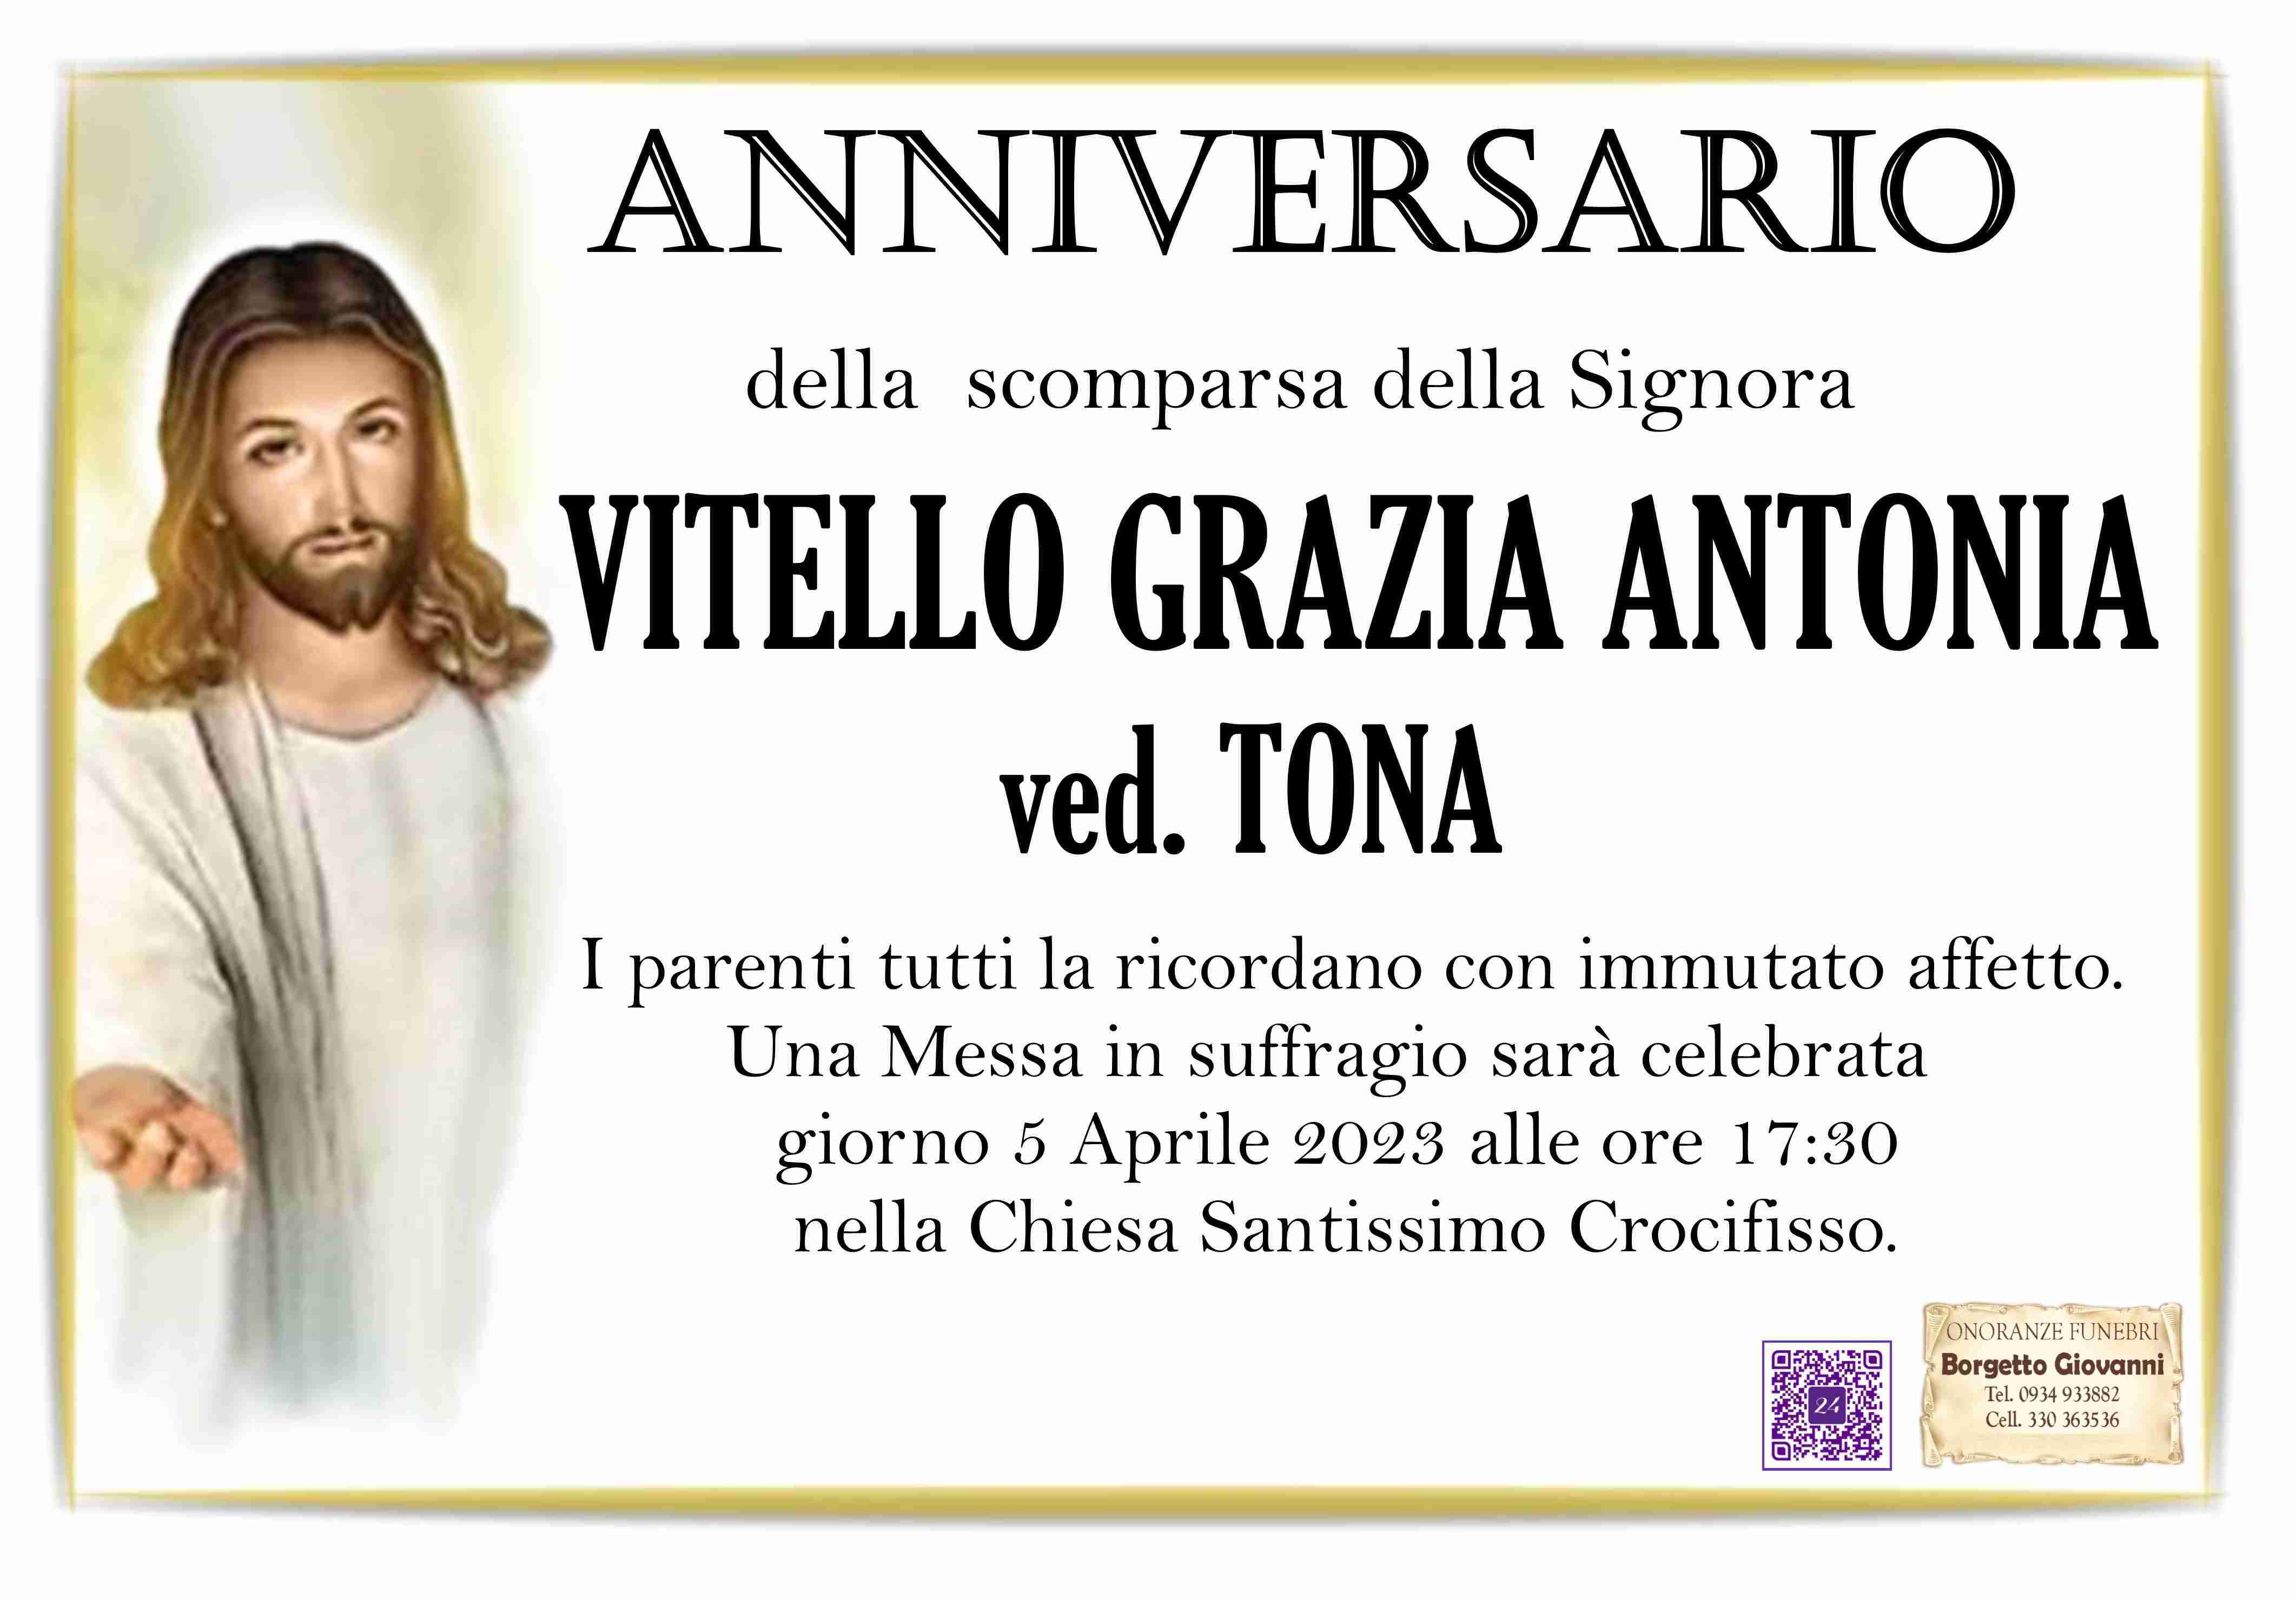 Grazia Antonia Vitello